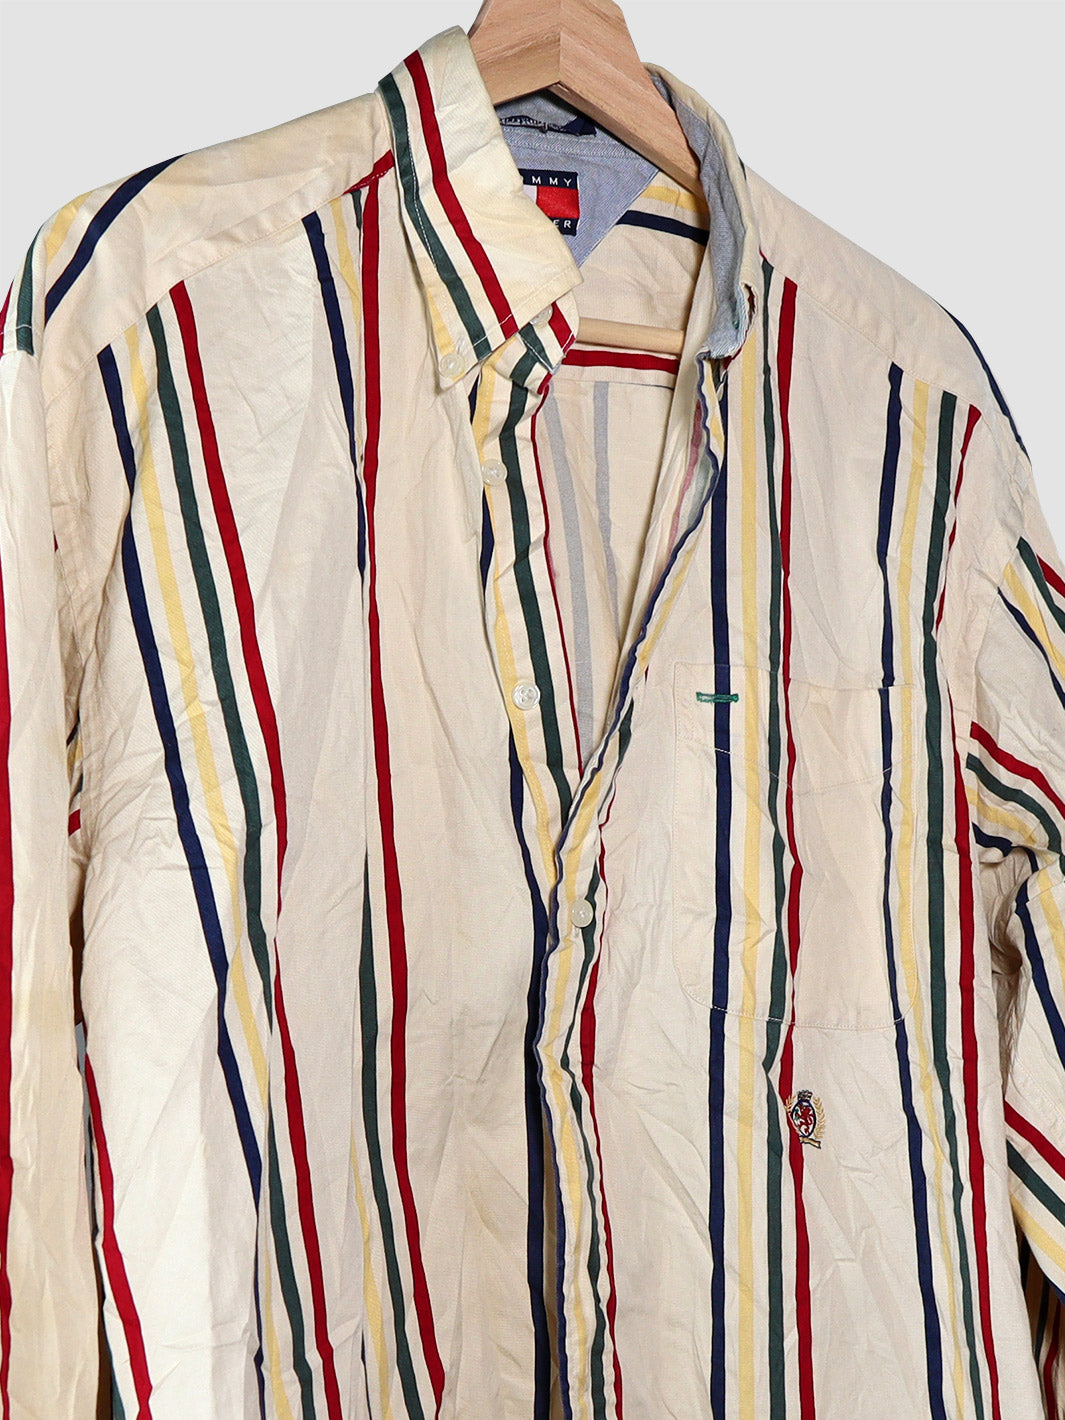 Y2k cream colored striped Tommy Hilfiger shirt.